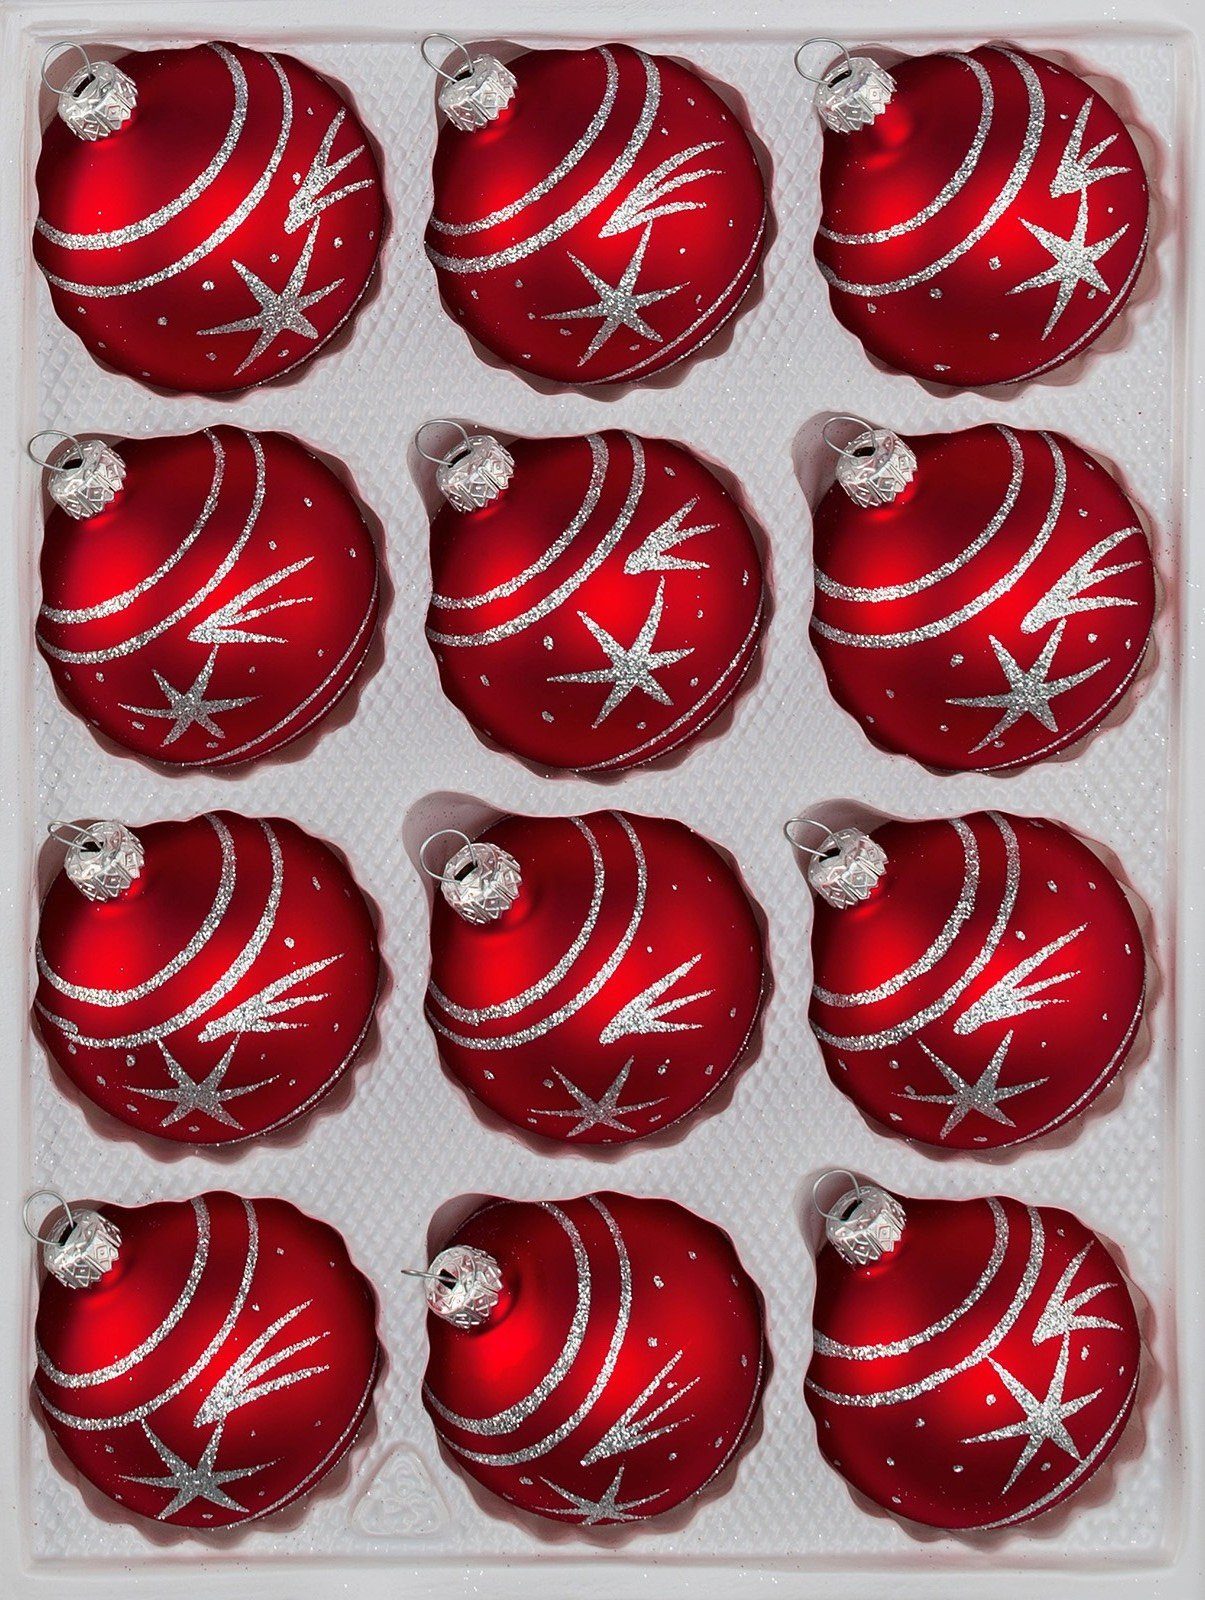 Navidacio Weihnachtsbaumkugel 12 tlg. Glas-Weihnachtskugeln Set in Classic Rot Silber Komet